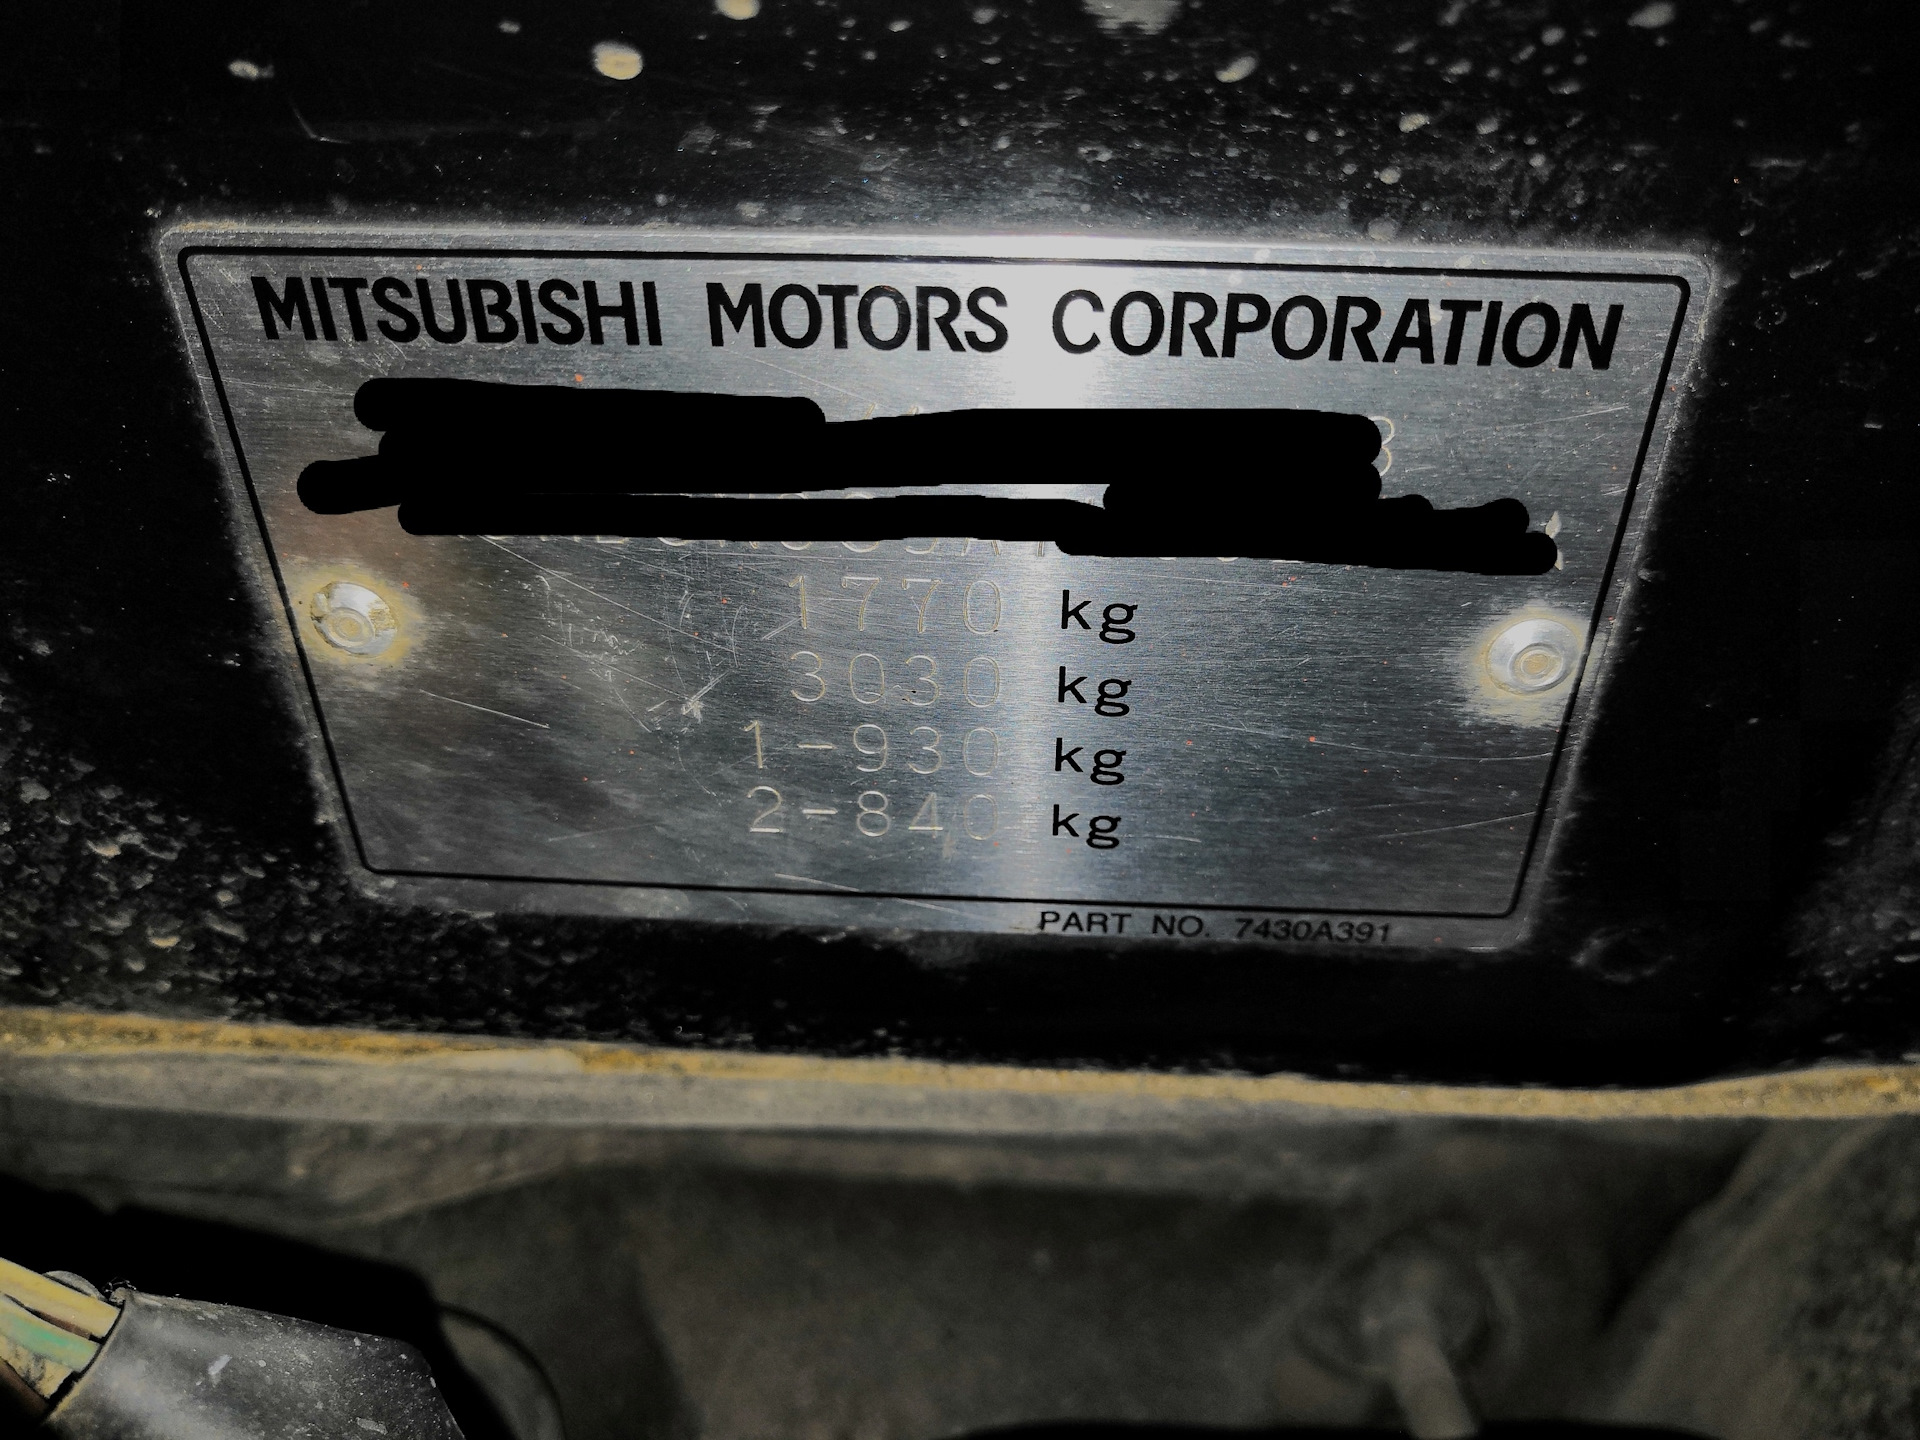 Вин таблички. Mitsubishi Outlander 2014 табличка VIN. Mitsubishi Lancer 10 VIN. L200 Mitsubishi маркировочная табличка. Митсубиси l300 VIN табличка.